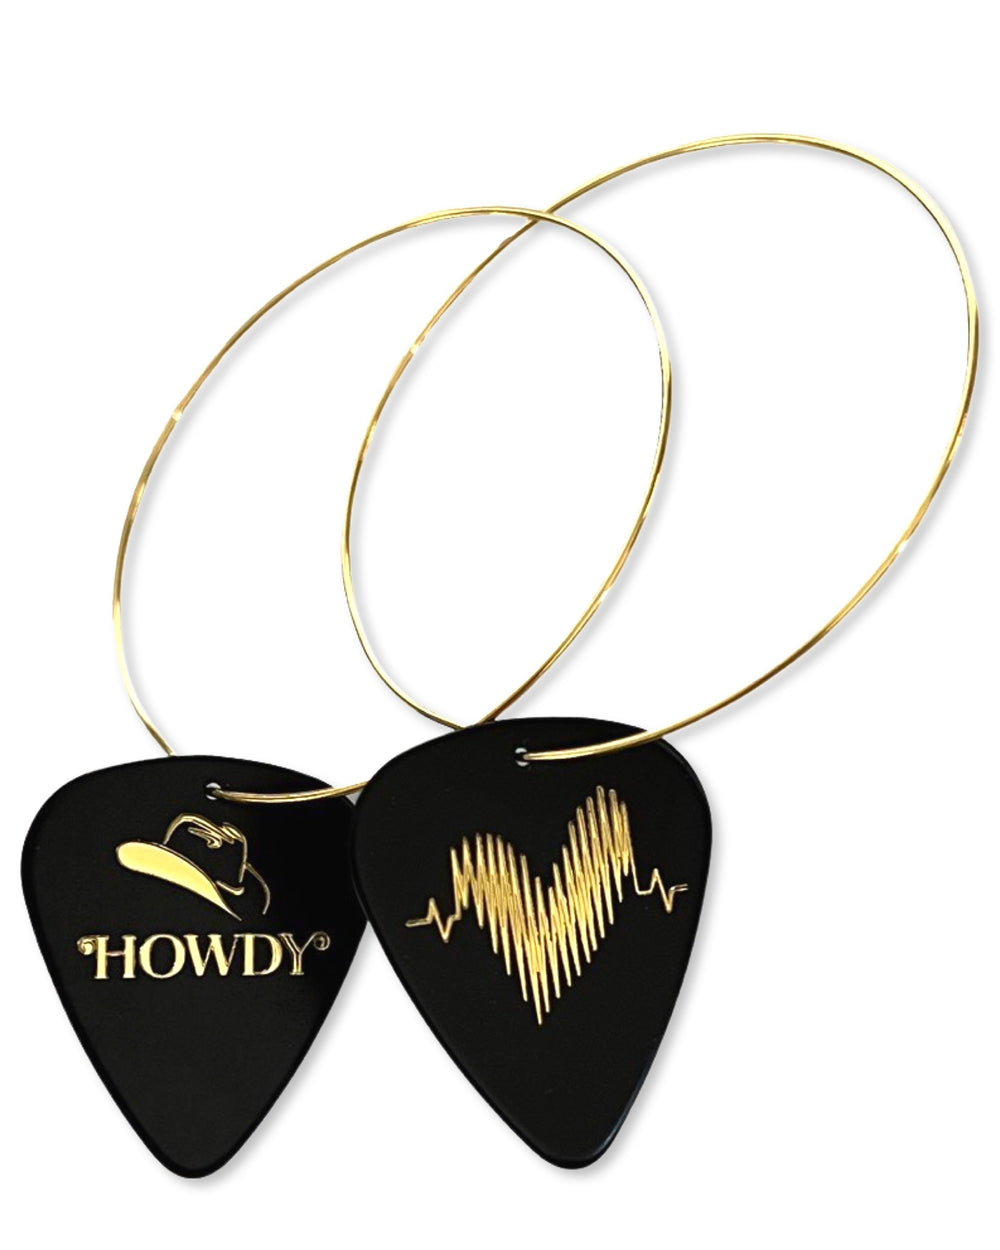 WS Howdy Black Gold Reversible Single Guitar Pick Earrings